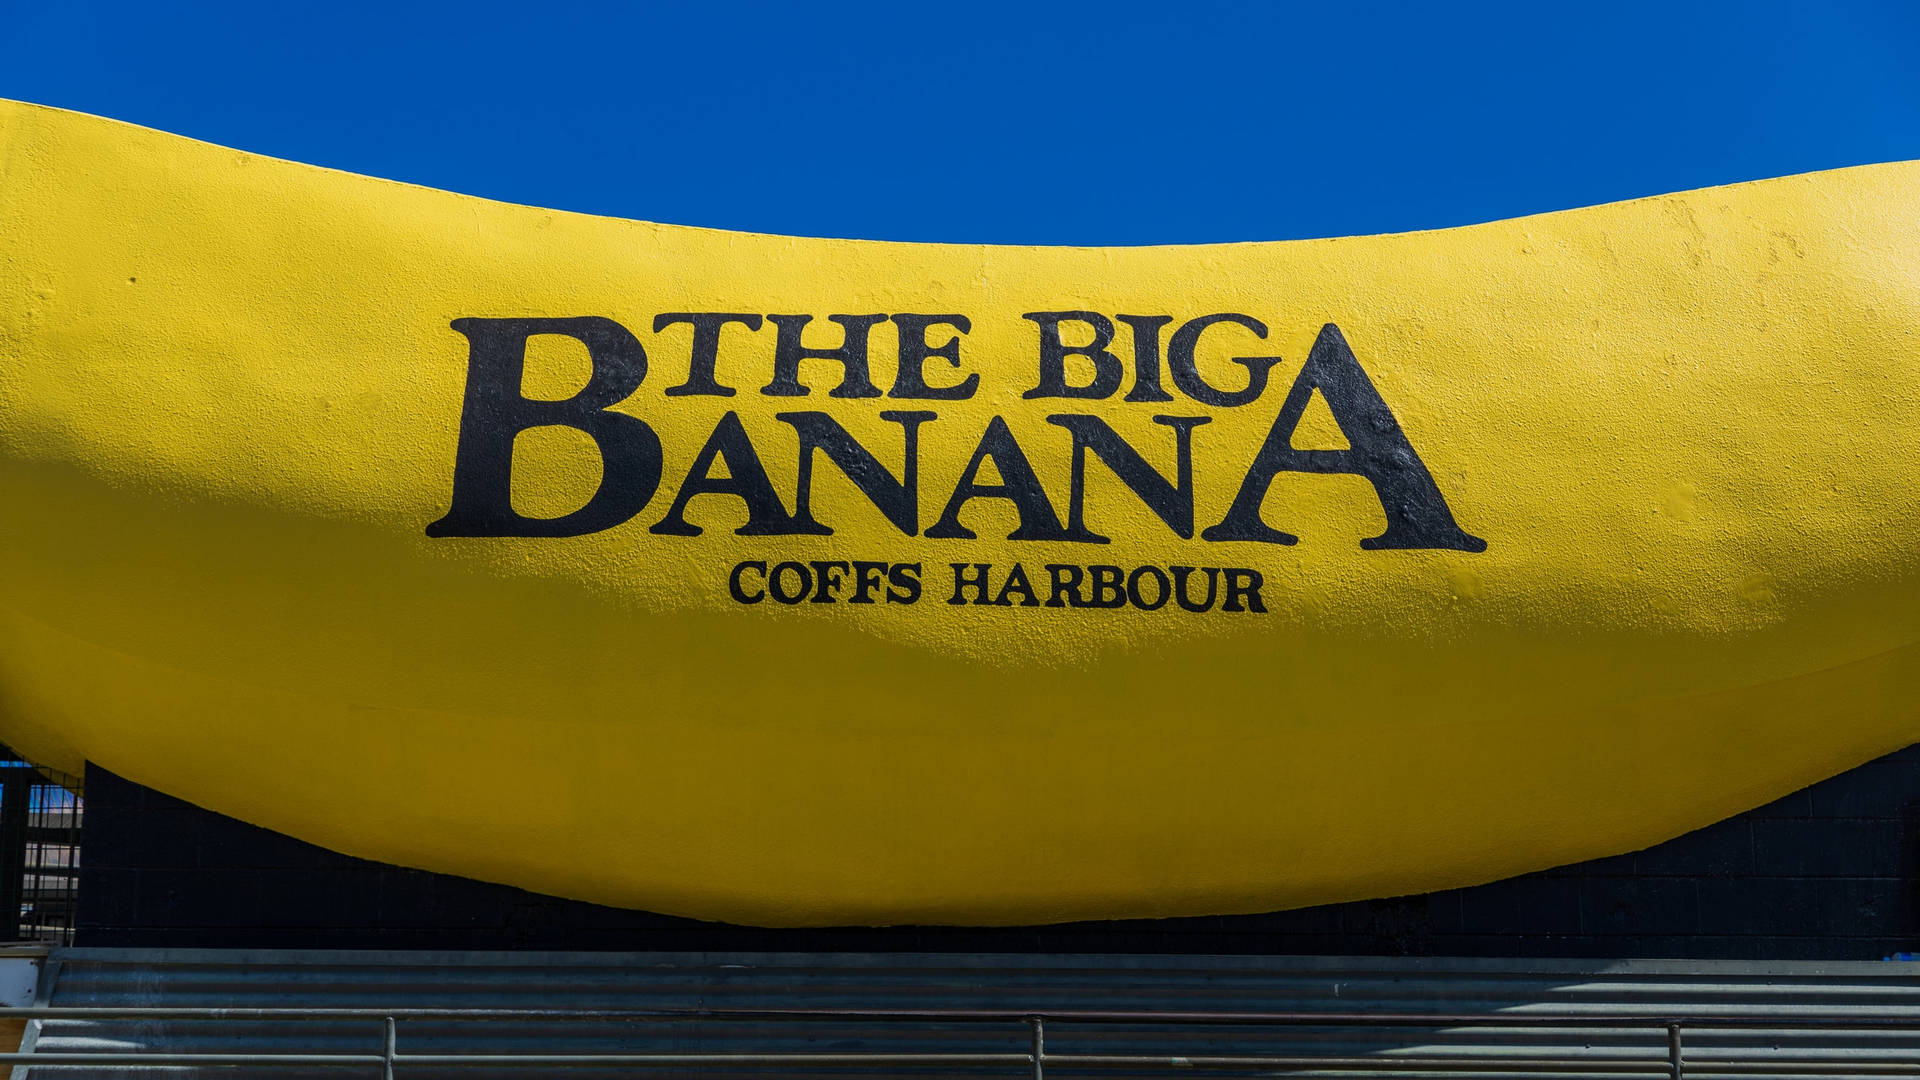 Big Banana Coffs Harbour Background